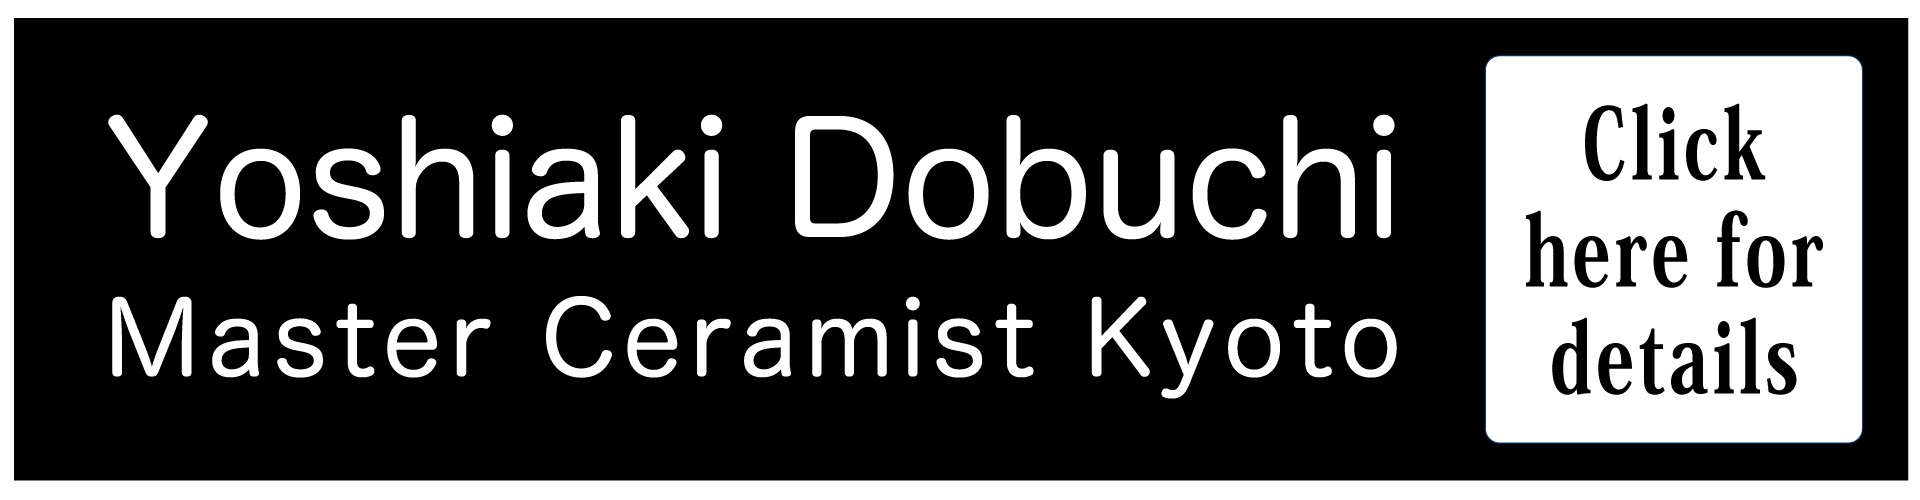 Yoshiaki Dobuchi Master Ceramist Kyoto（image）